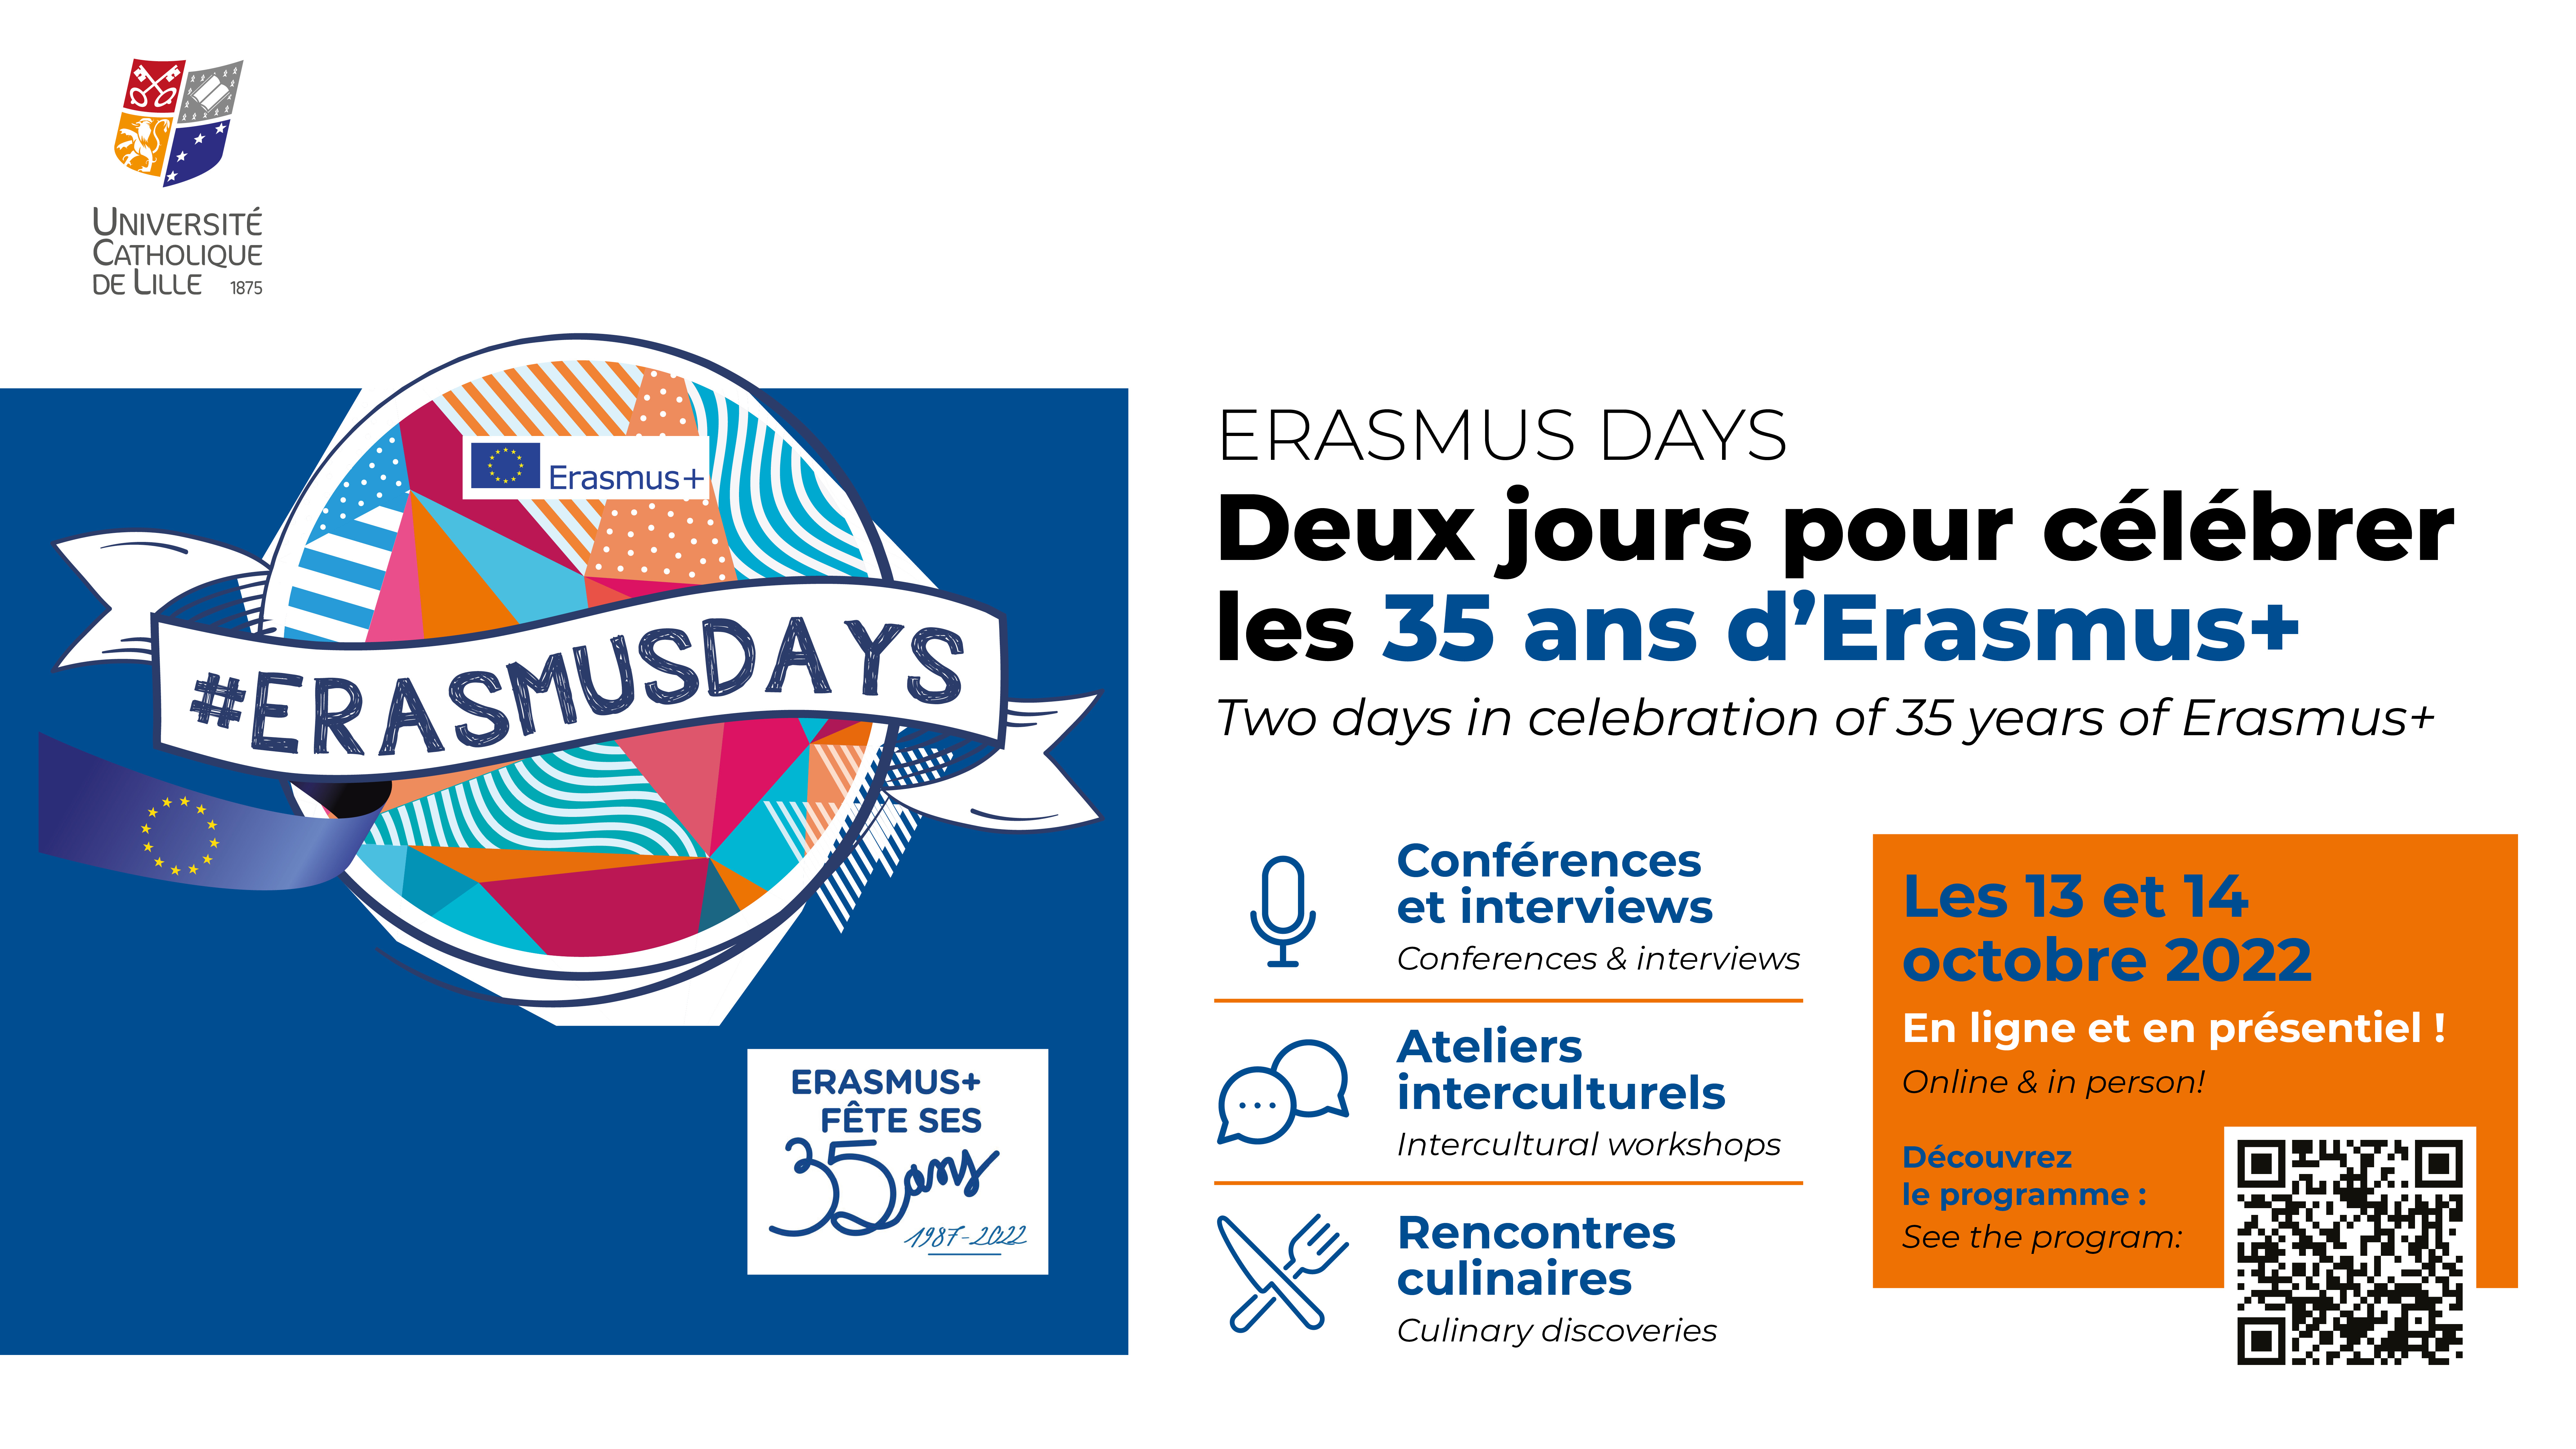 Erasmus Days program